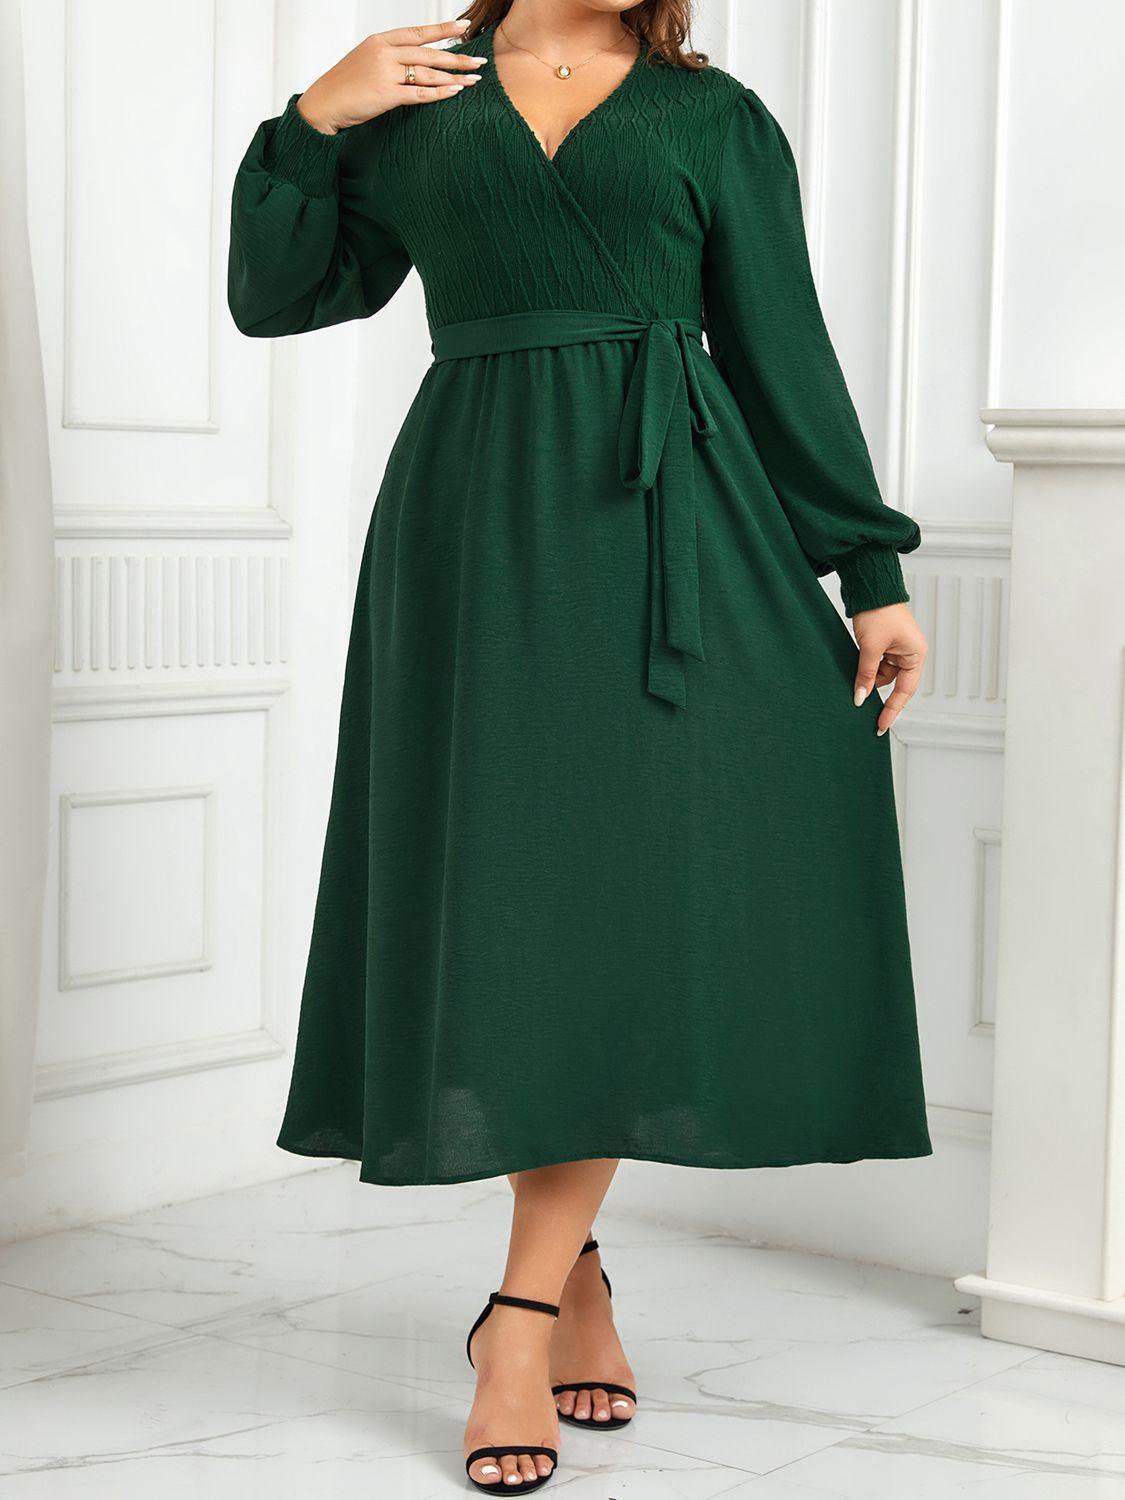 Spectacular Choice Plus Size Green Midi Dress - MXSTUDIO.COM